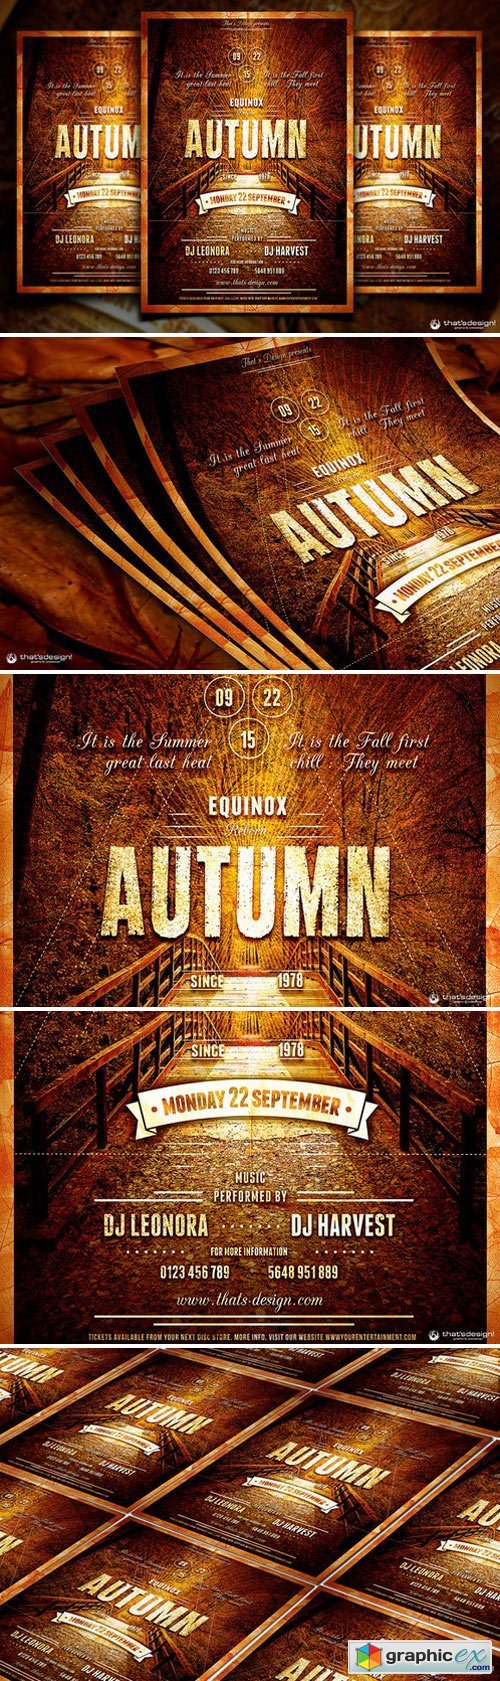 Autumn Equinox Flyer Template